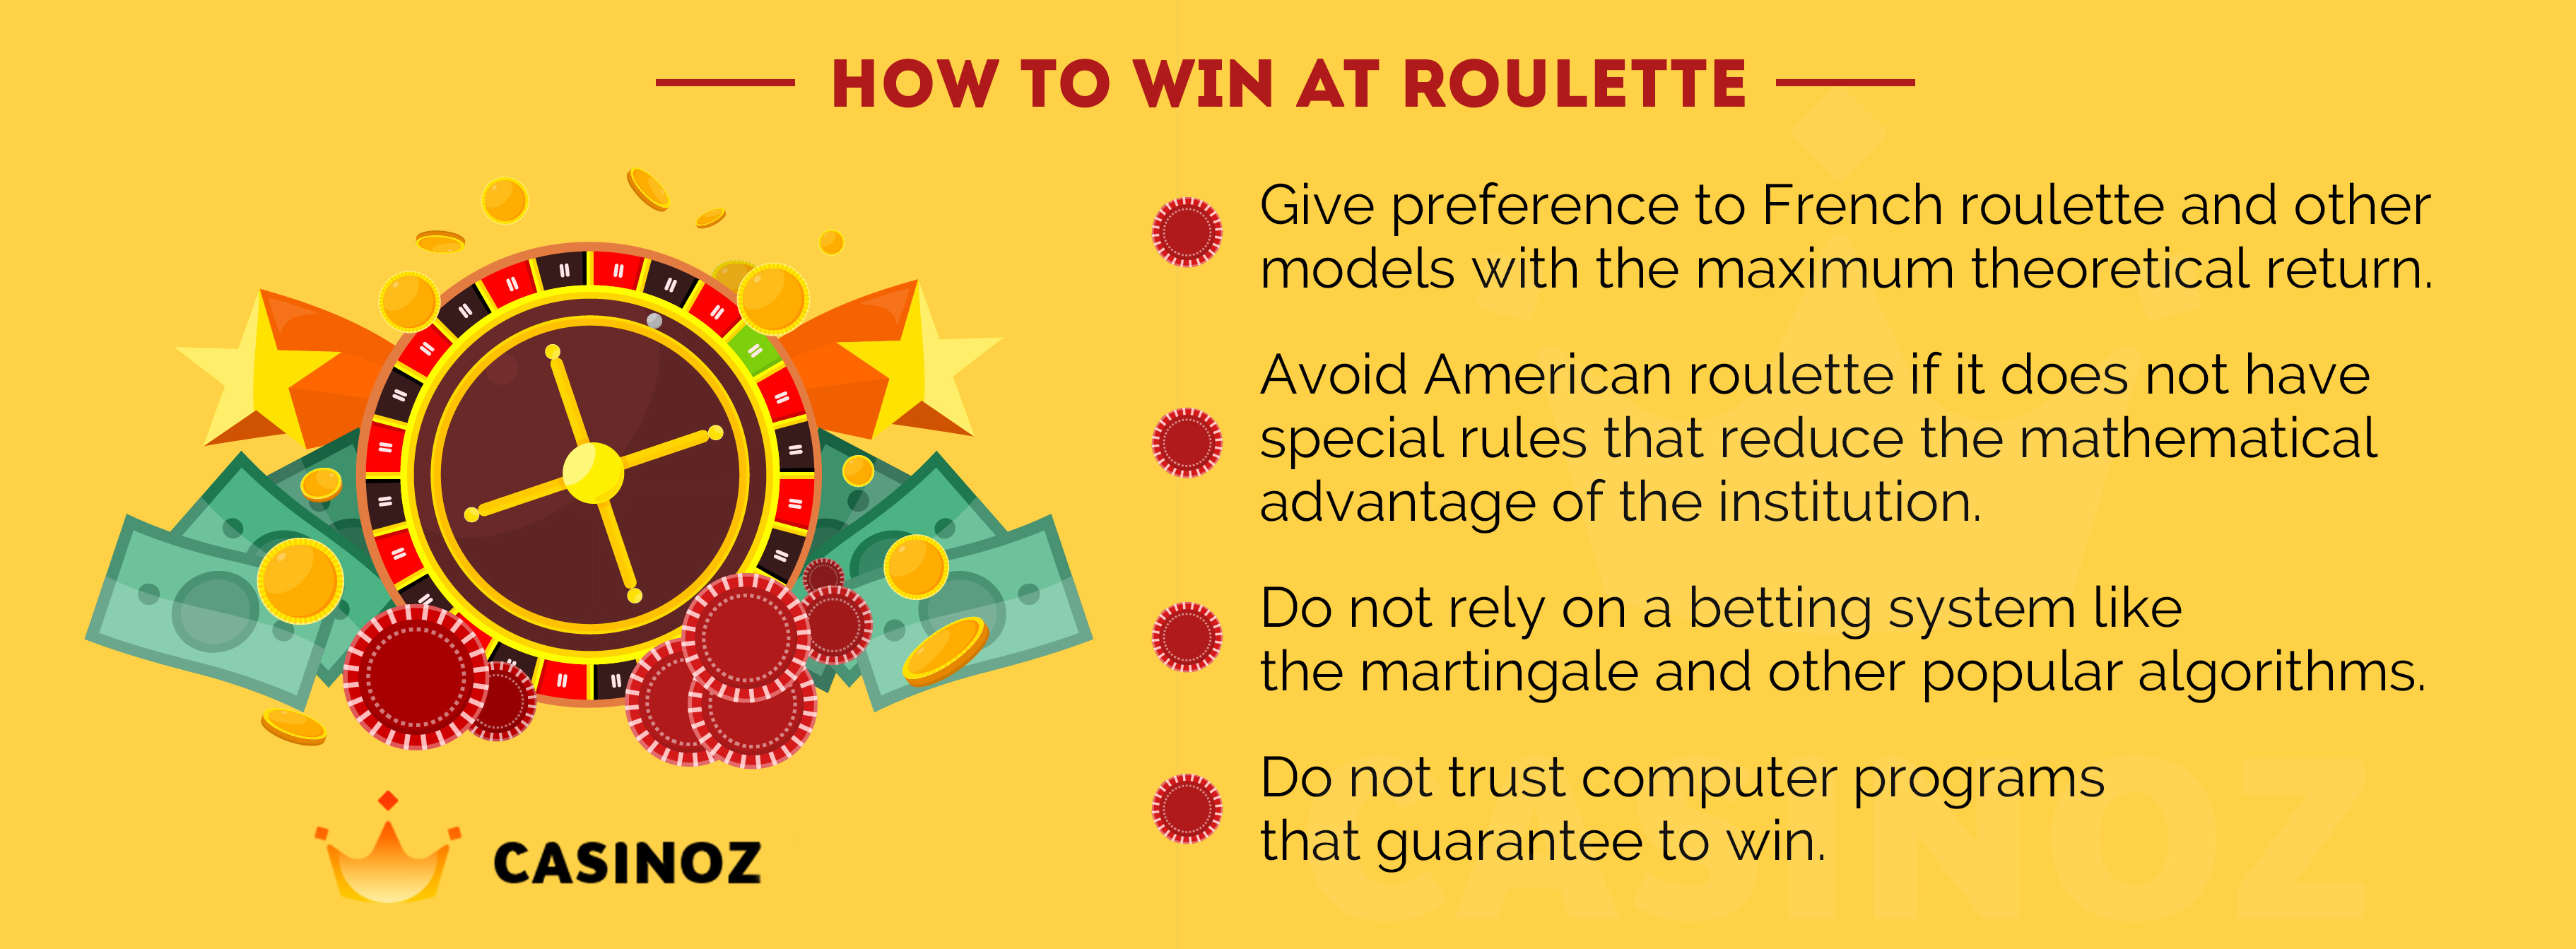 Roulette Rules Boss casino 24006